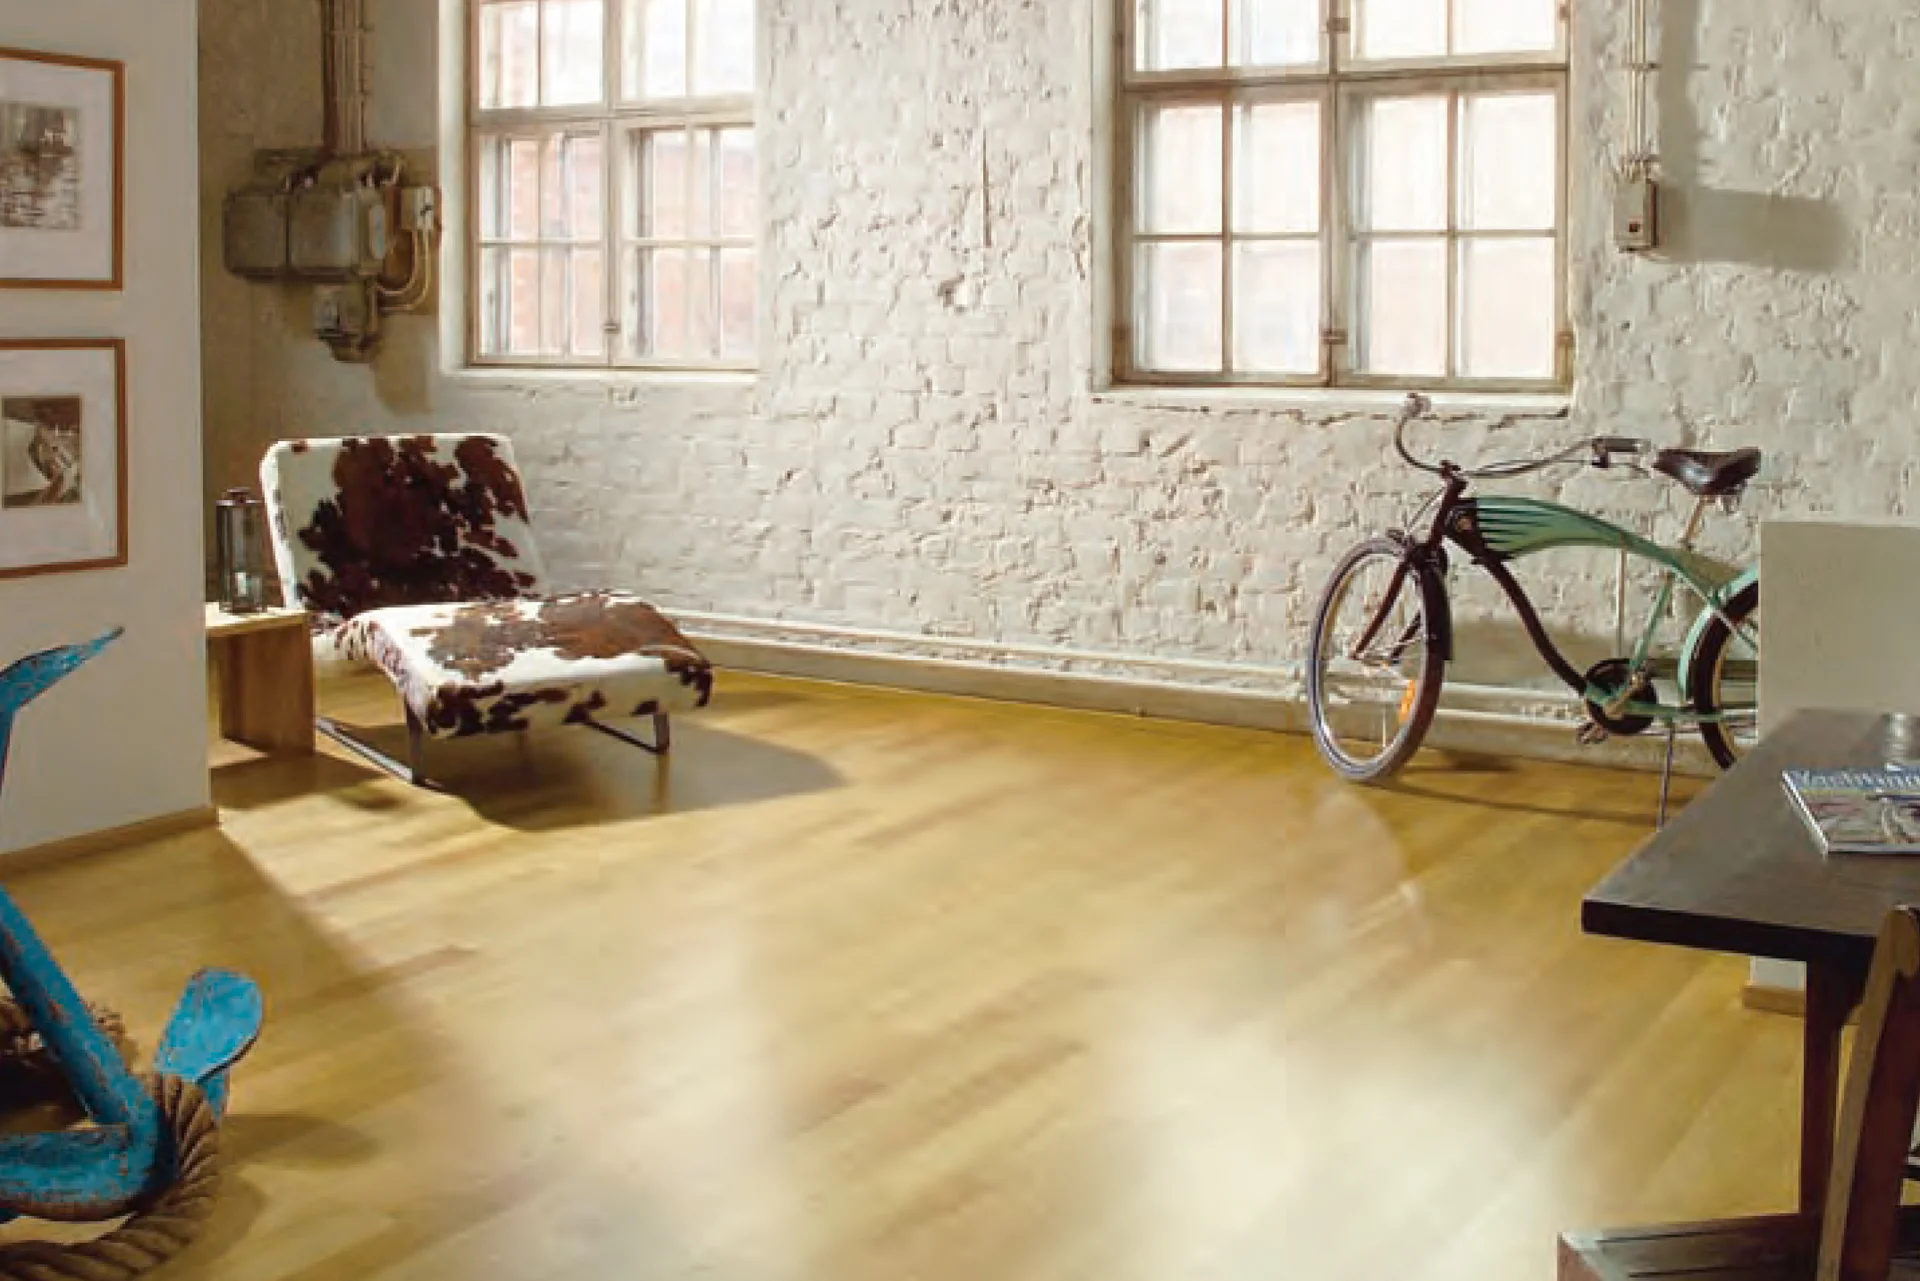 web design company creating a captivating website for hardwood floors